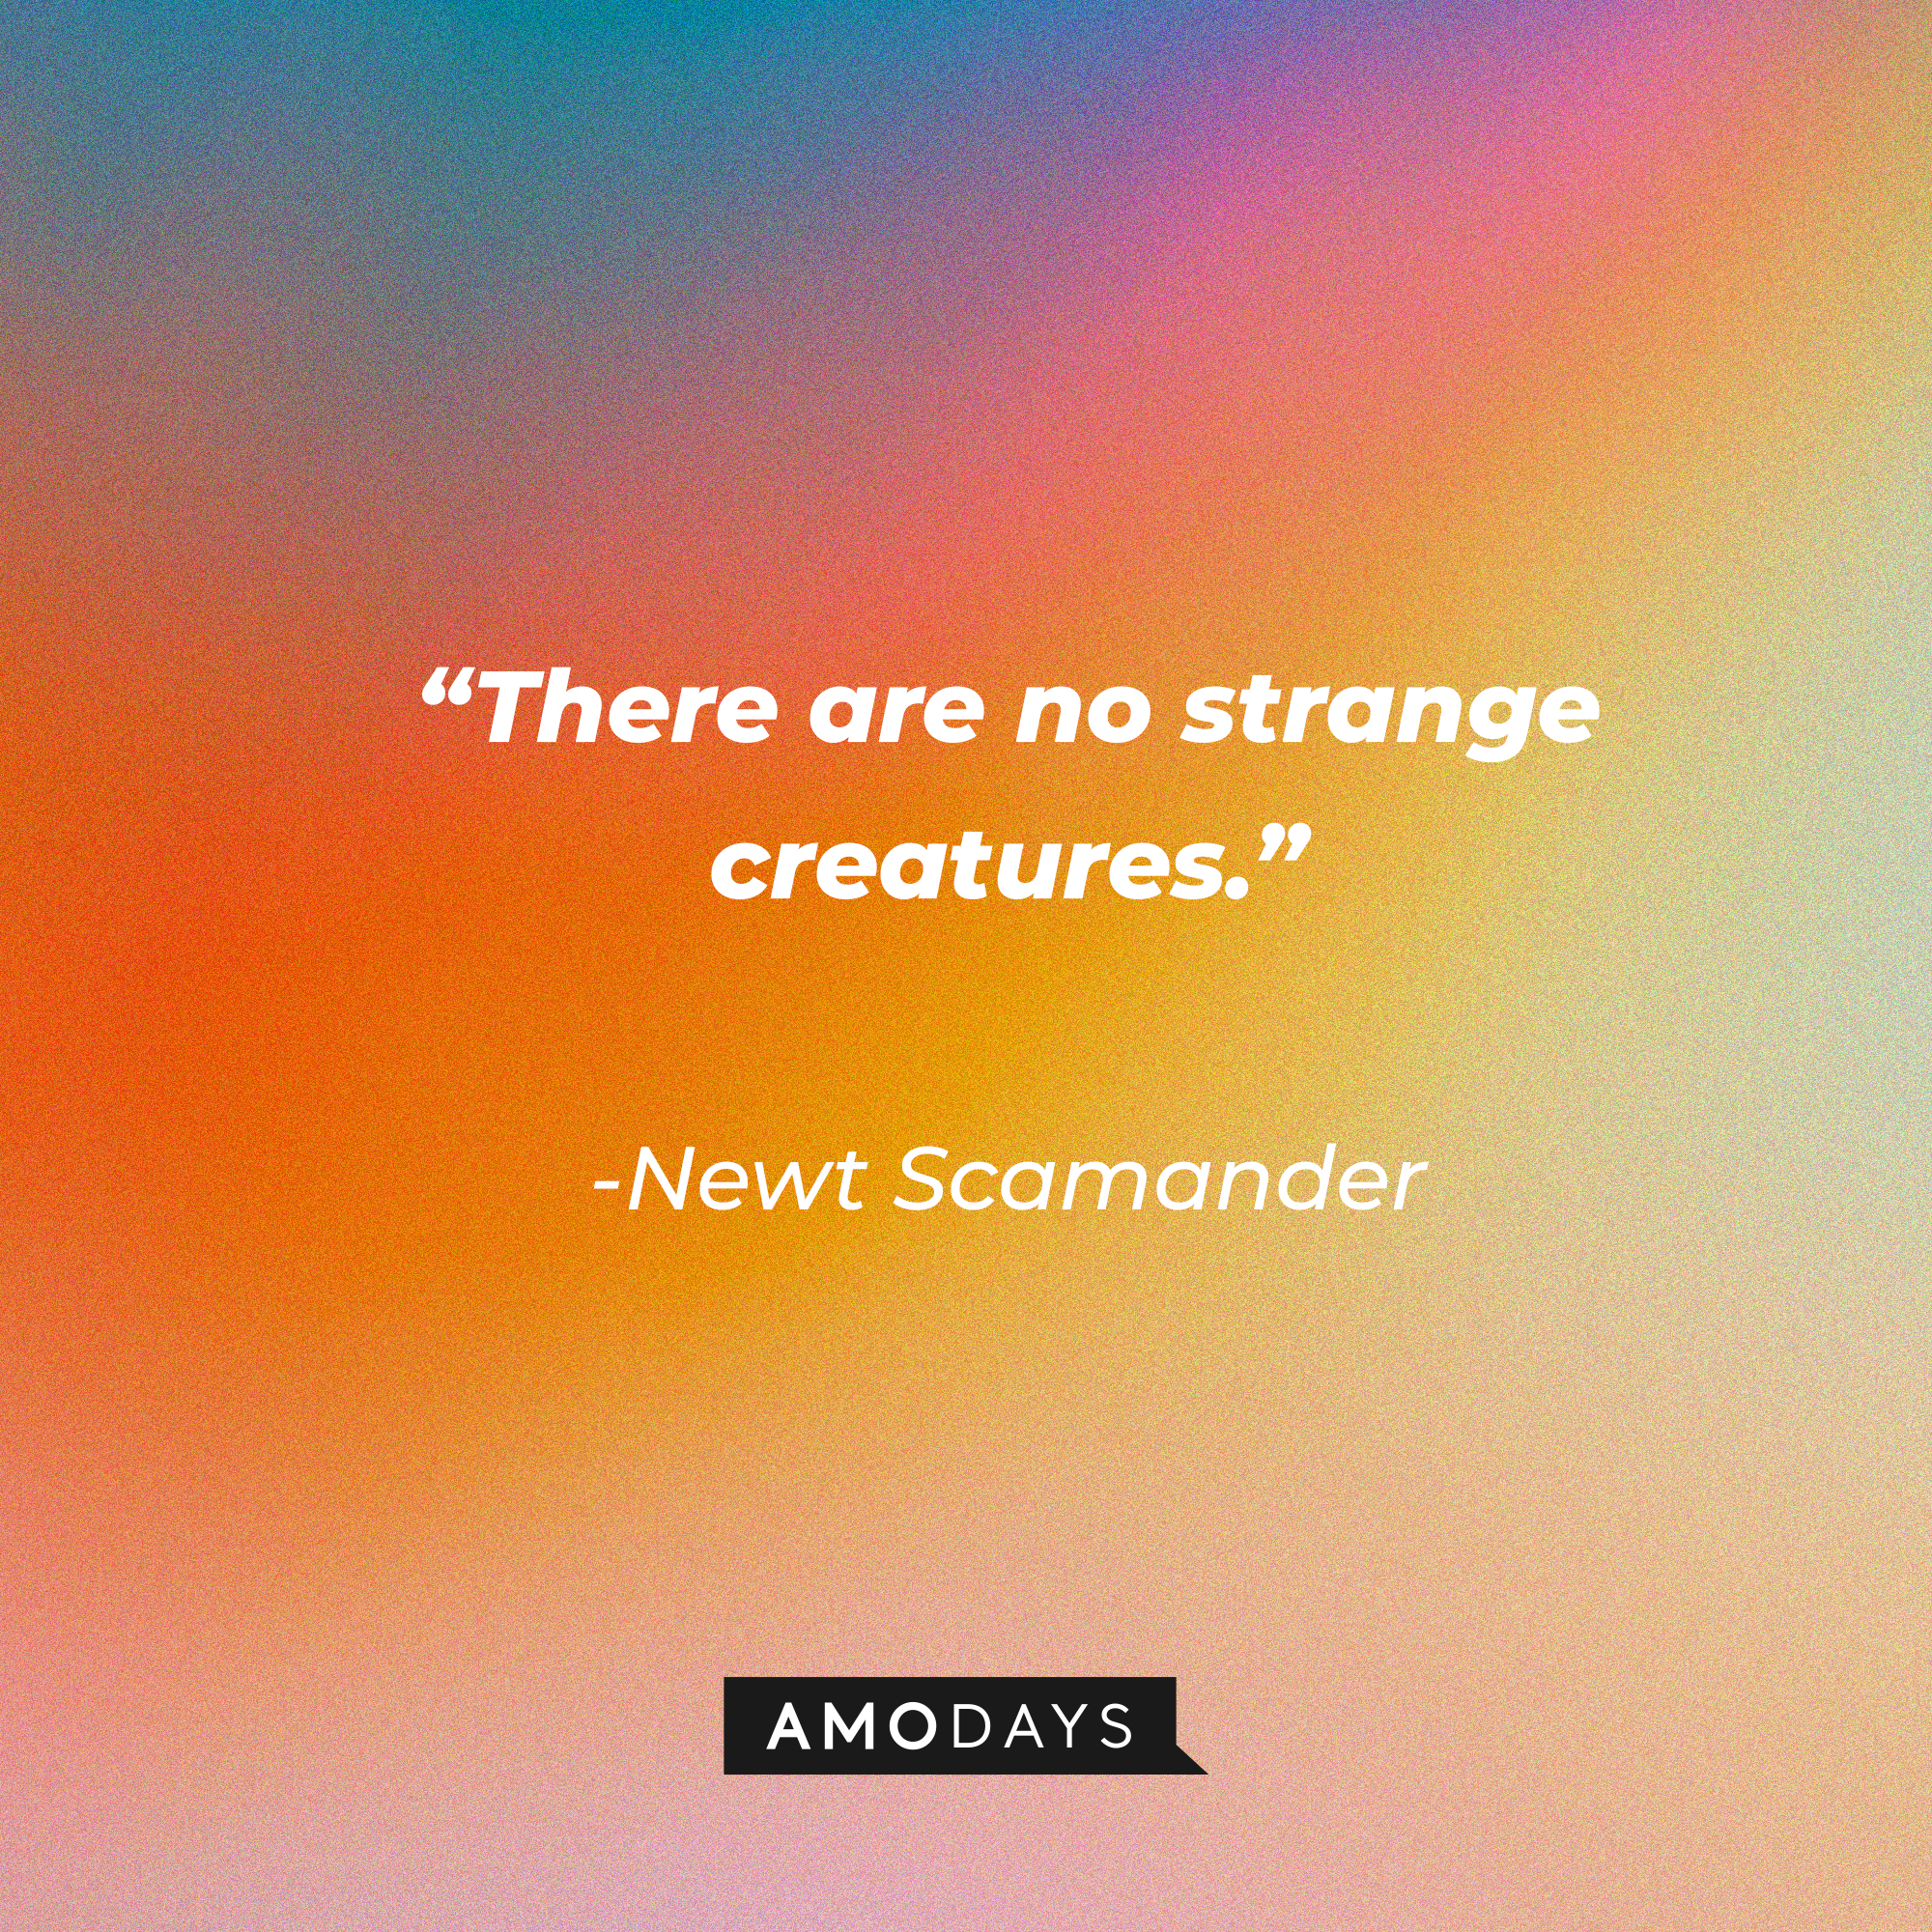 Newt Scamander's quote: "There are no strange creatures." | Source: facebook.com/fantasticbeastsmovie